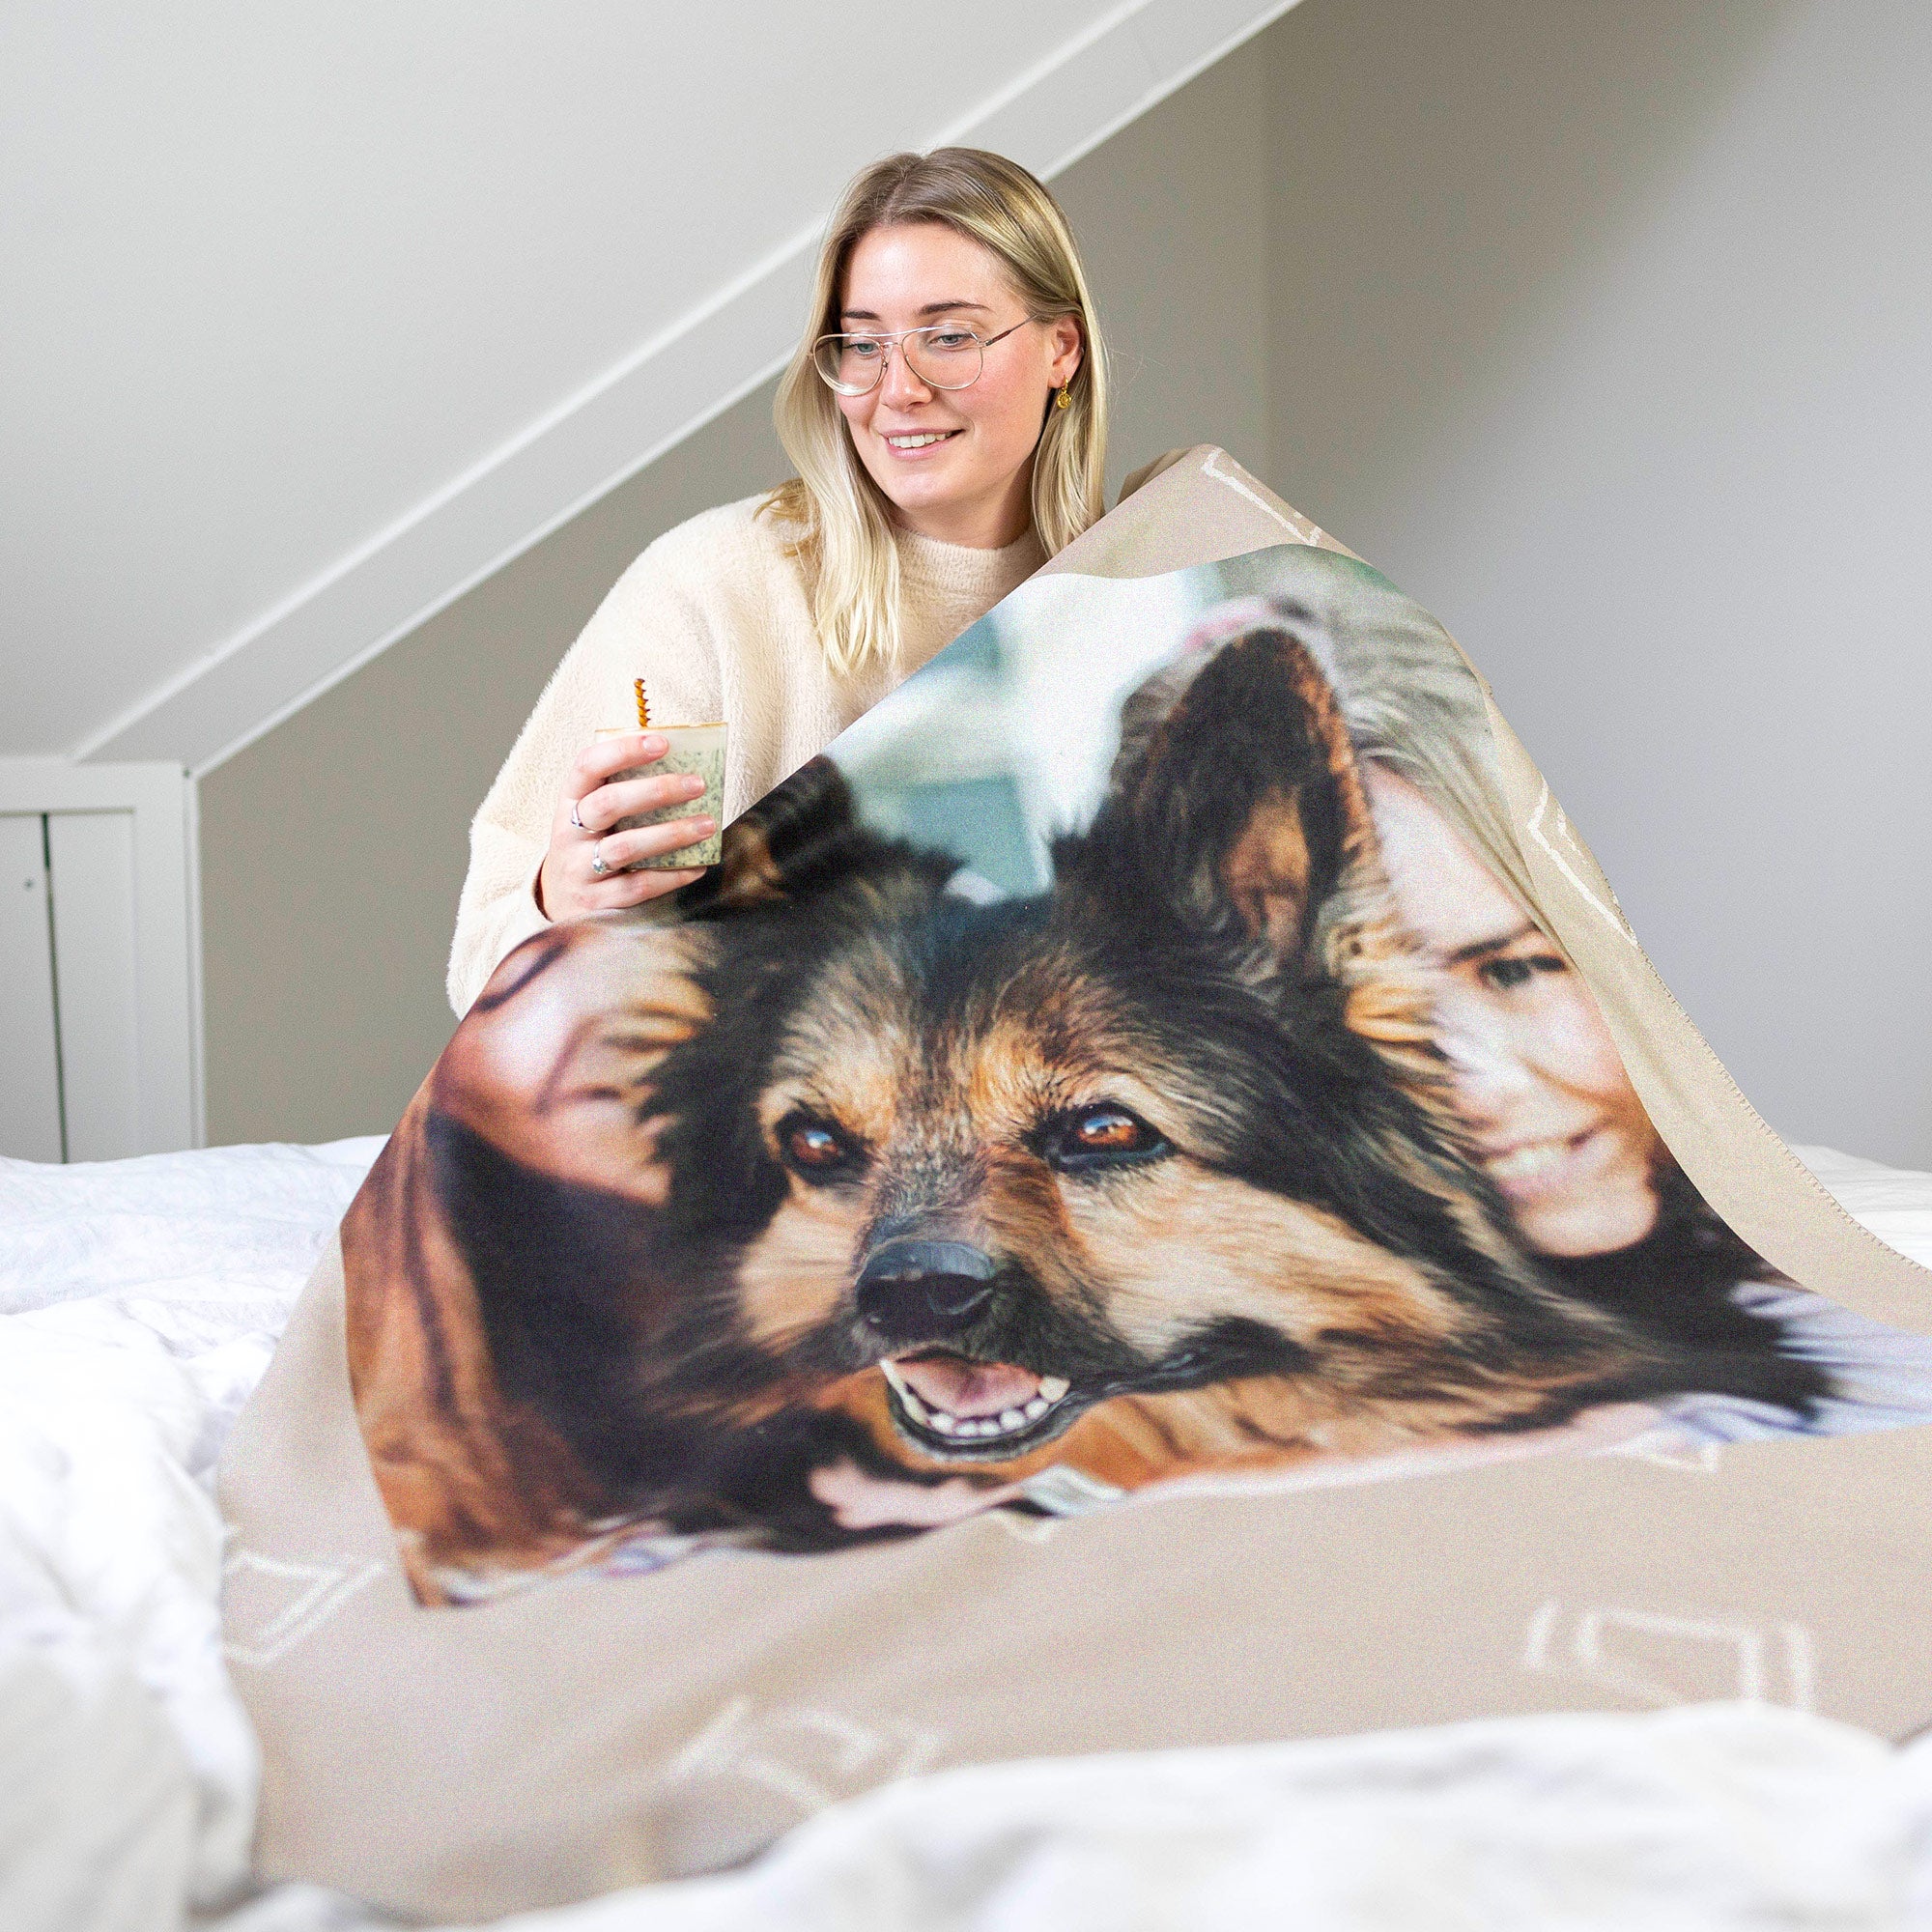 Fleece photo blanket - Extra warm - 150x100